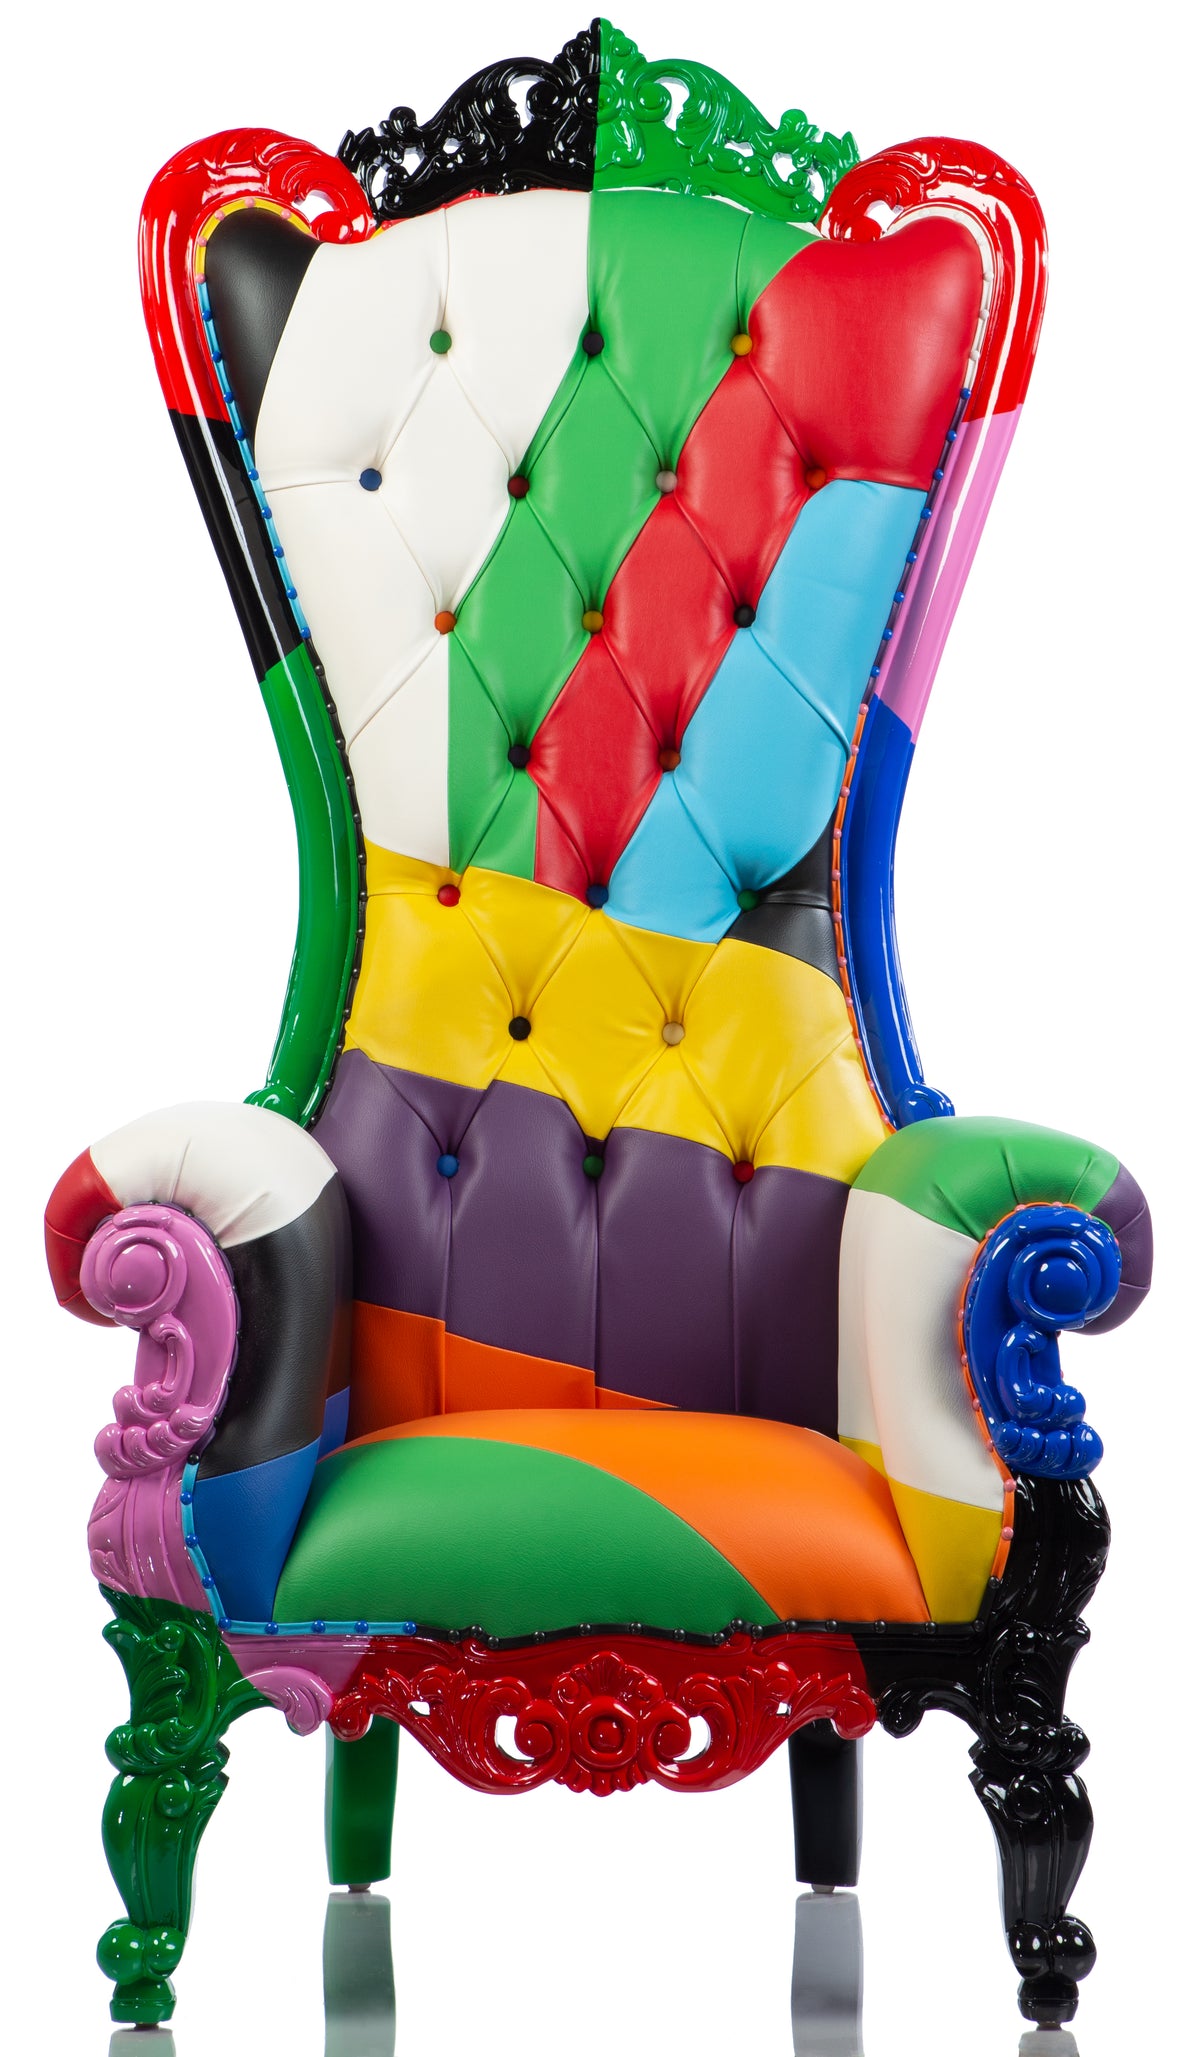 The Balvin Shellback Throne Multicolored (West Coast)